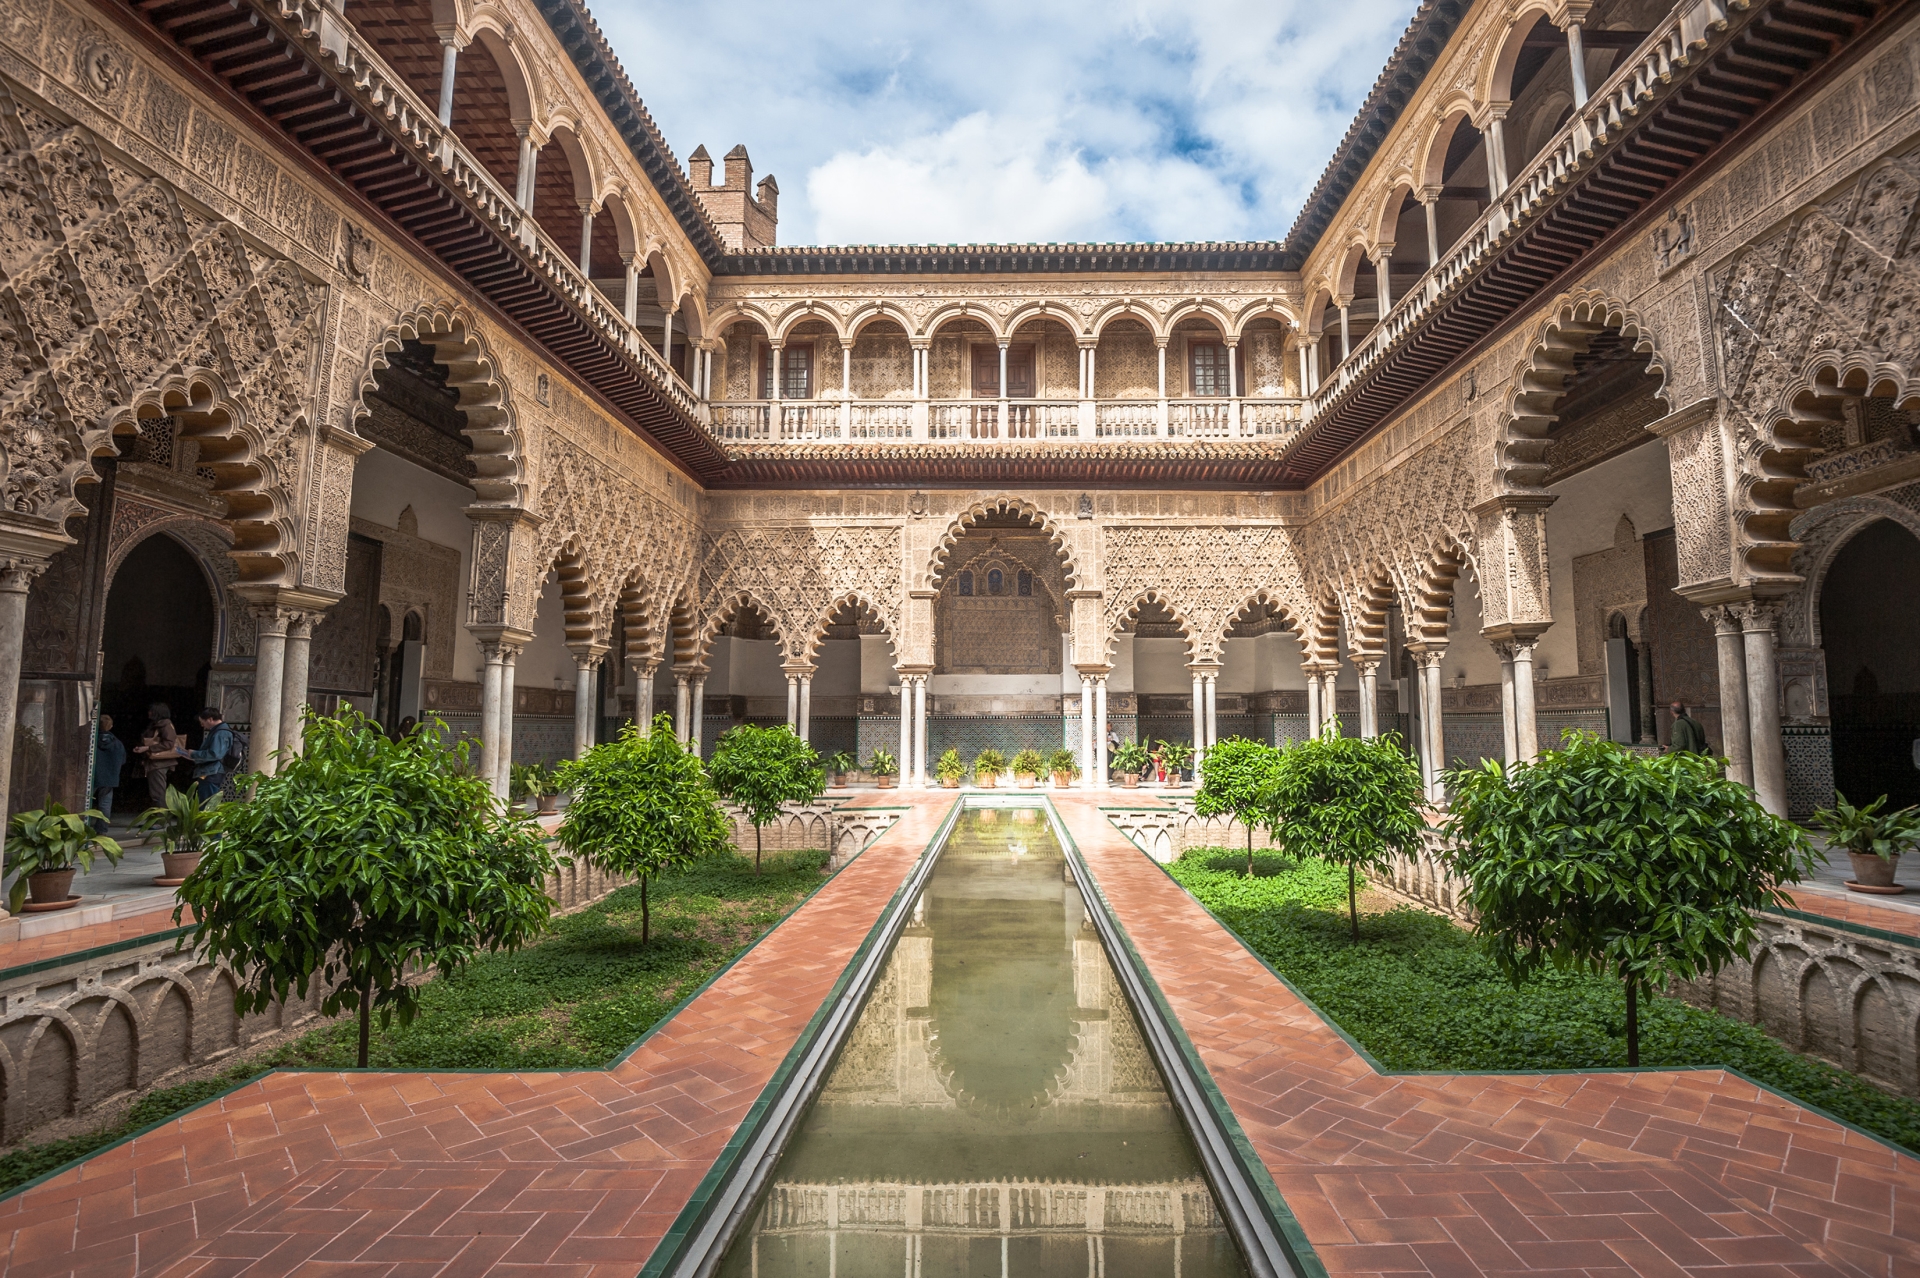 Real Alcazar Seville - Simply Andalucia